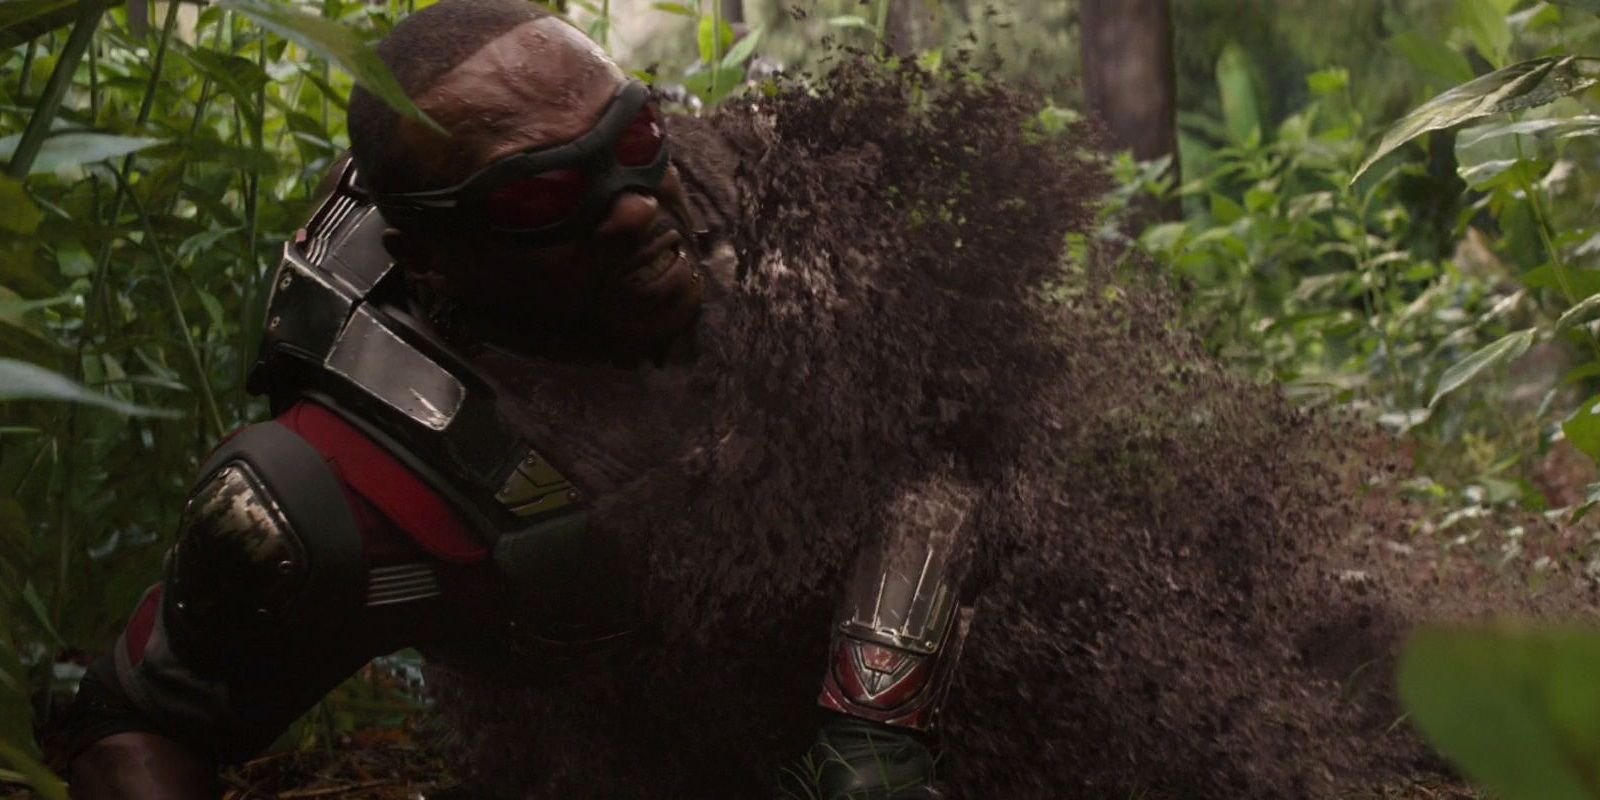 Sam Wilson turns to dust in Avengers Infinity War